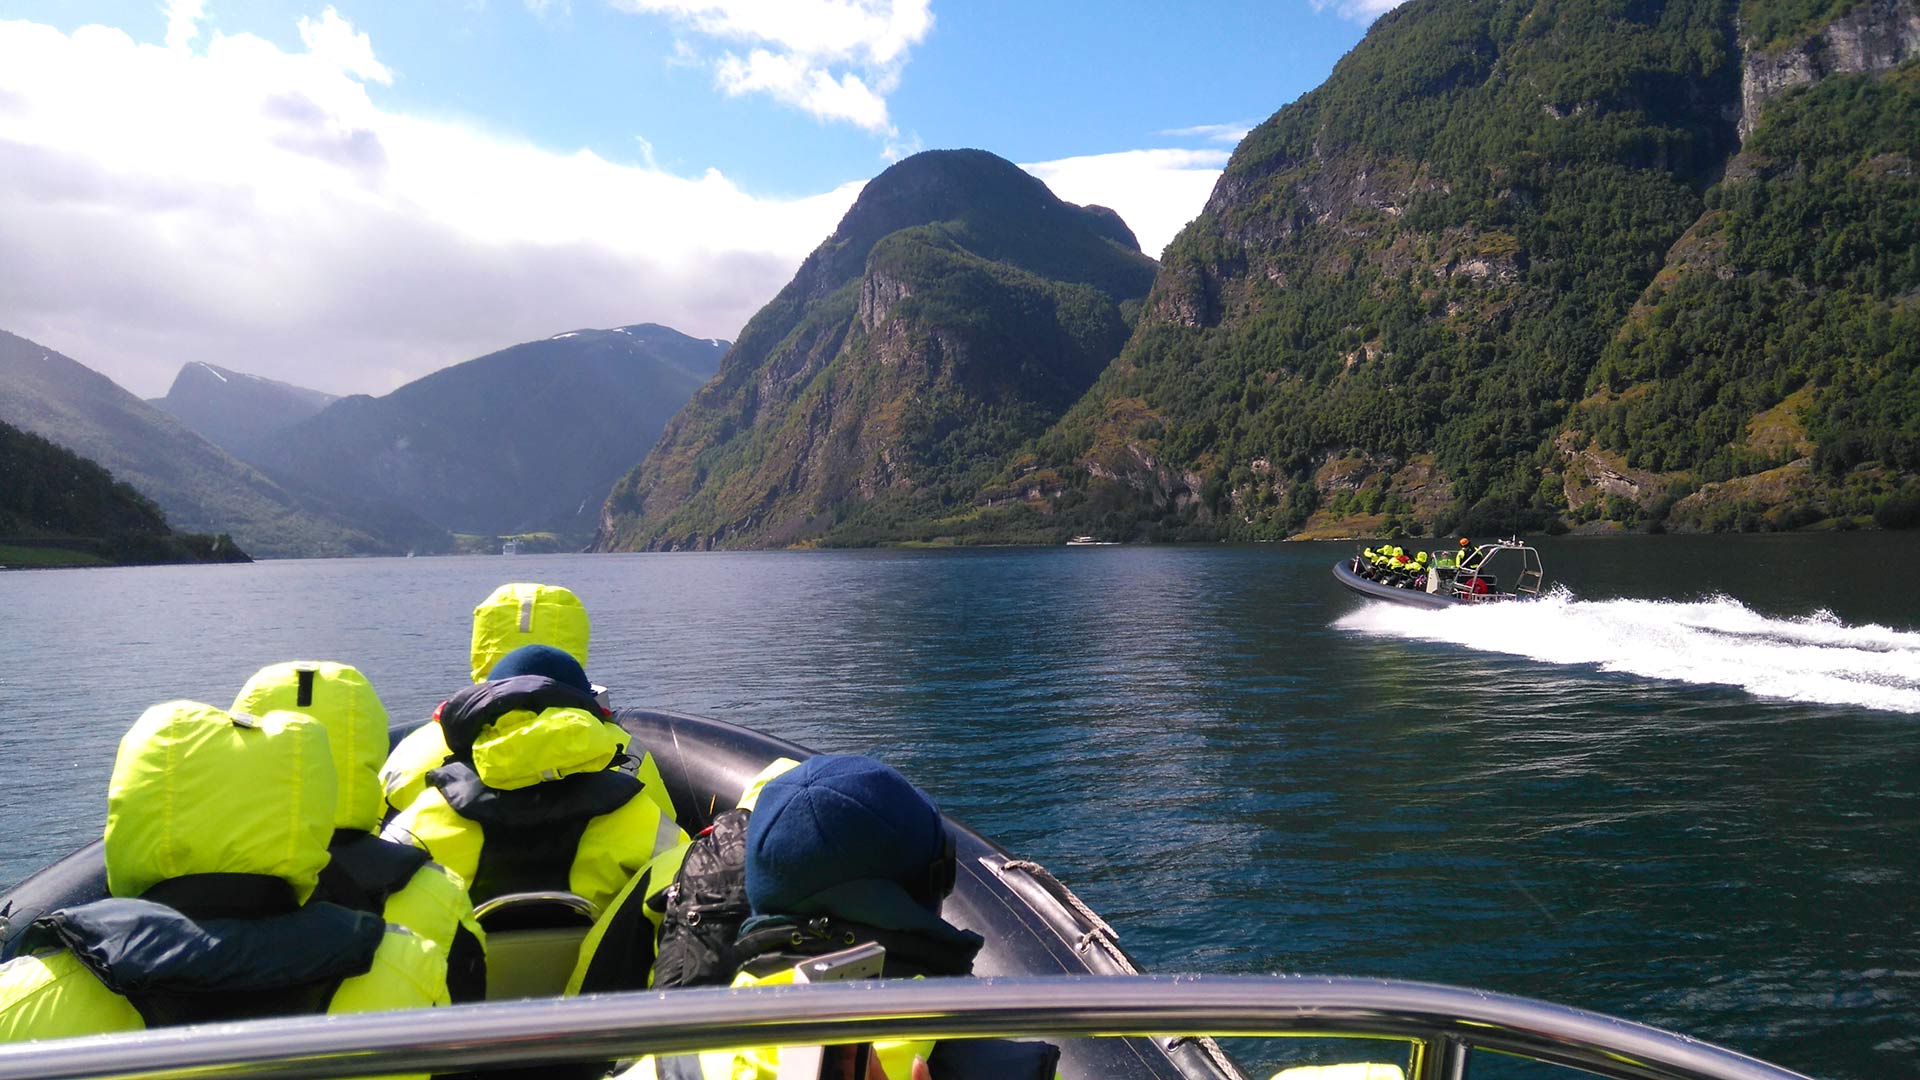 Rib Boat Safari in Sognefjord ©Adventure tours Norway